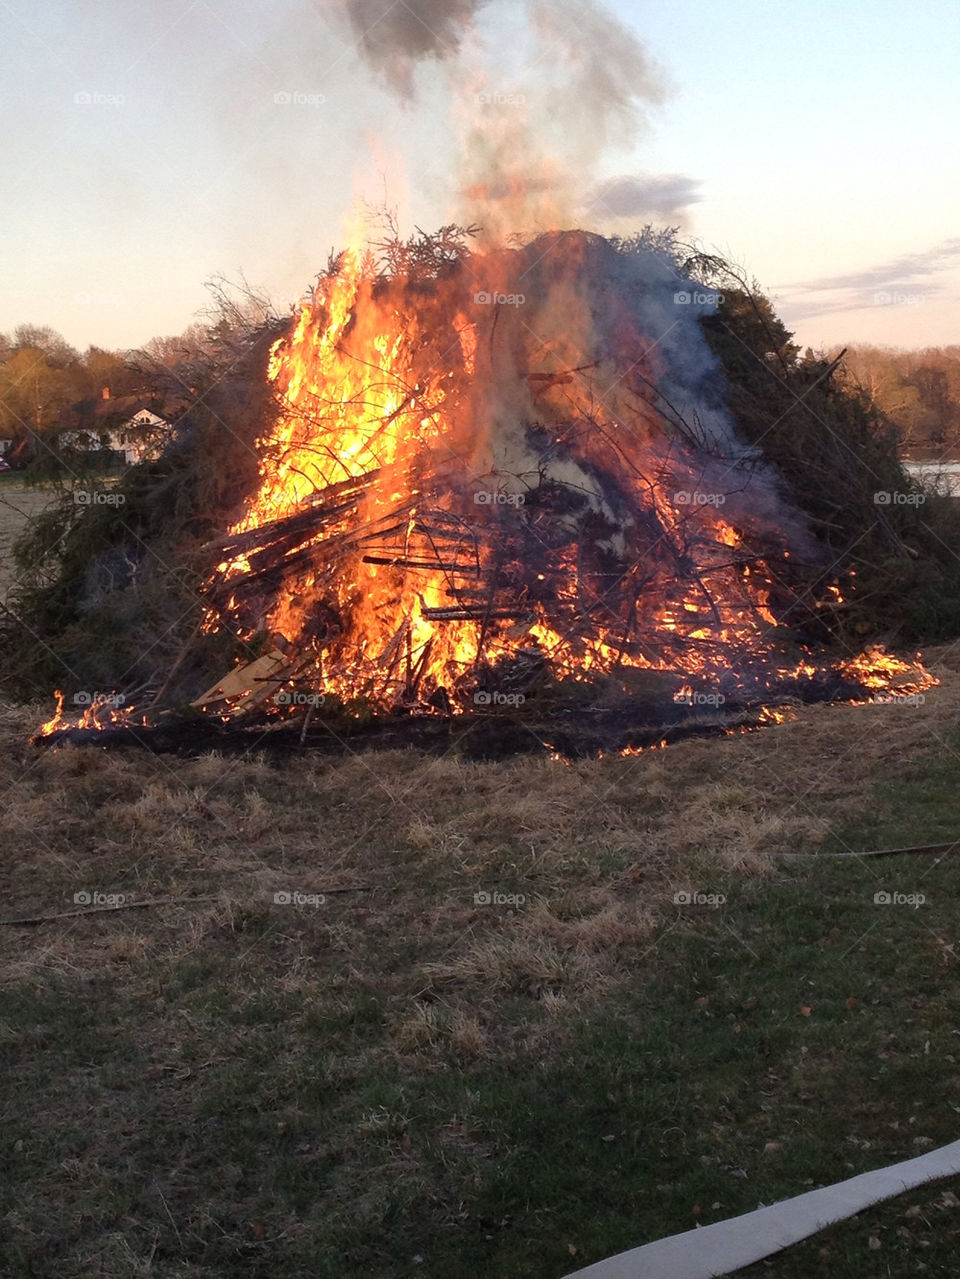 sweden grass fire shine by casperlo